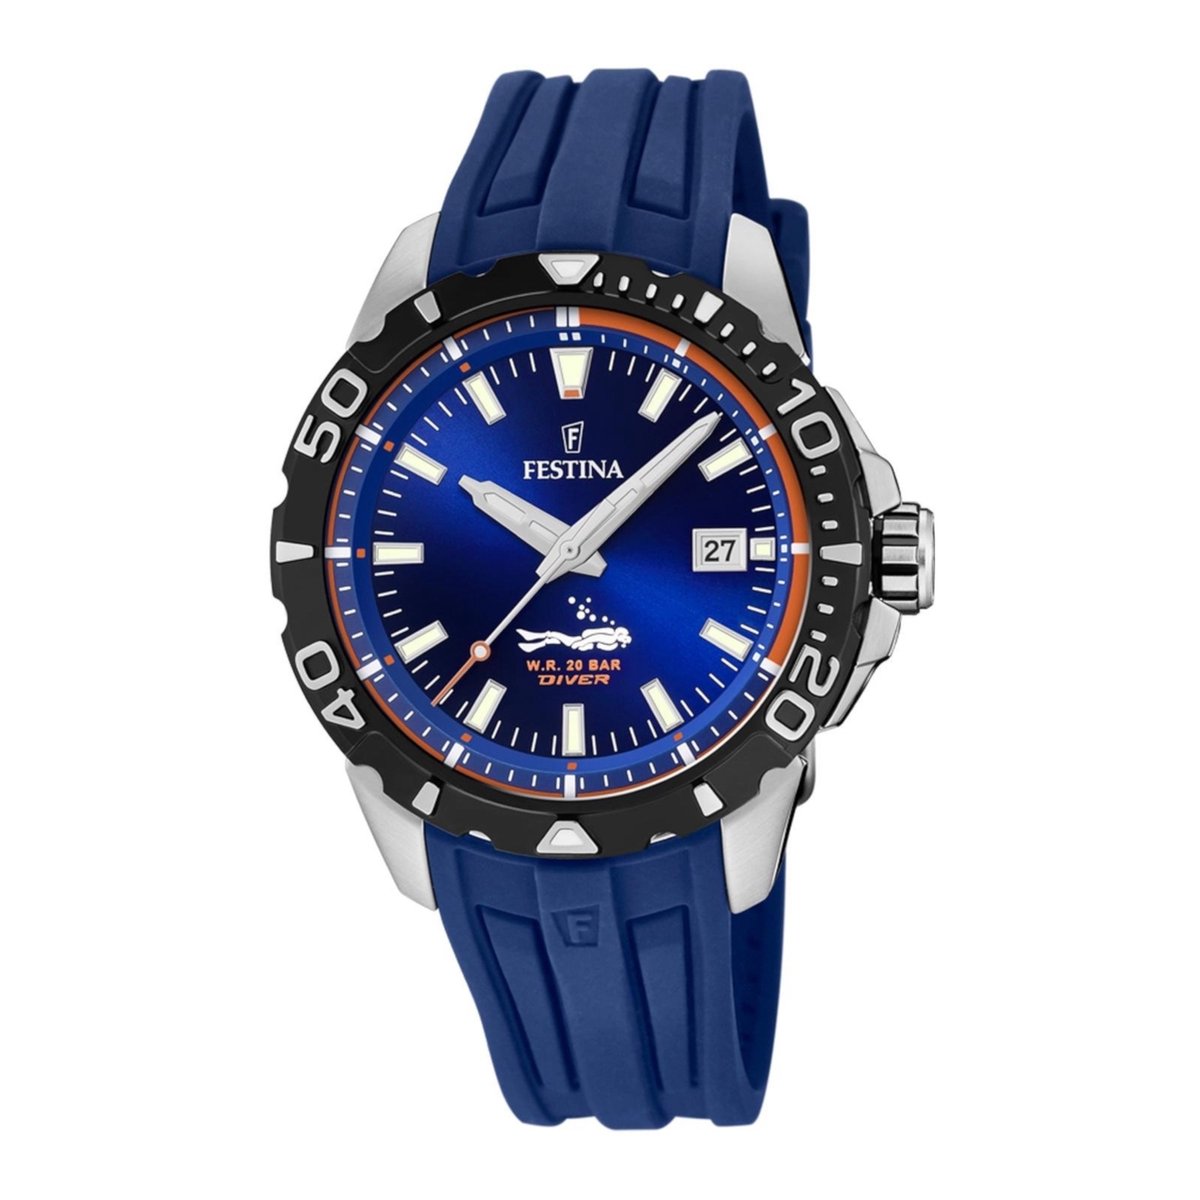 Festina The Originals Diver Horloge - Festina heren horloge - Blauw - diameter 44.5 mm - roestvrij staal